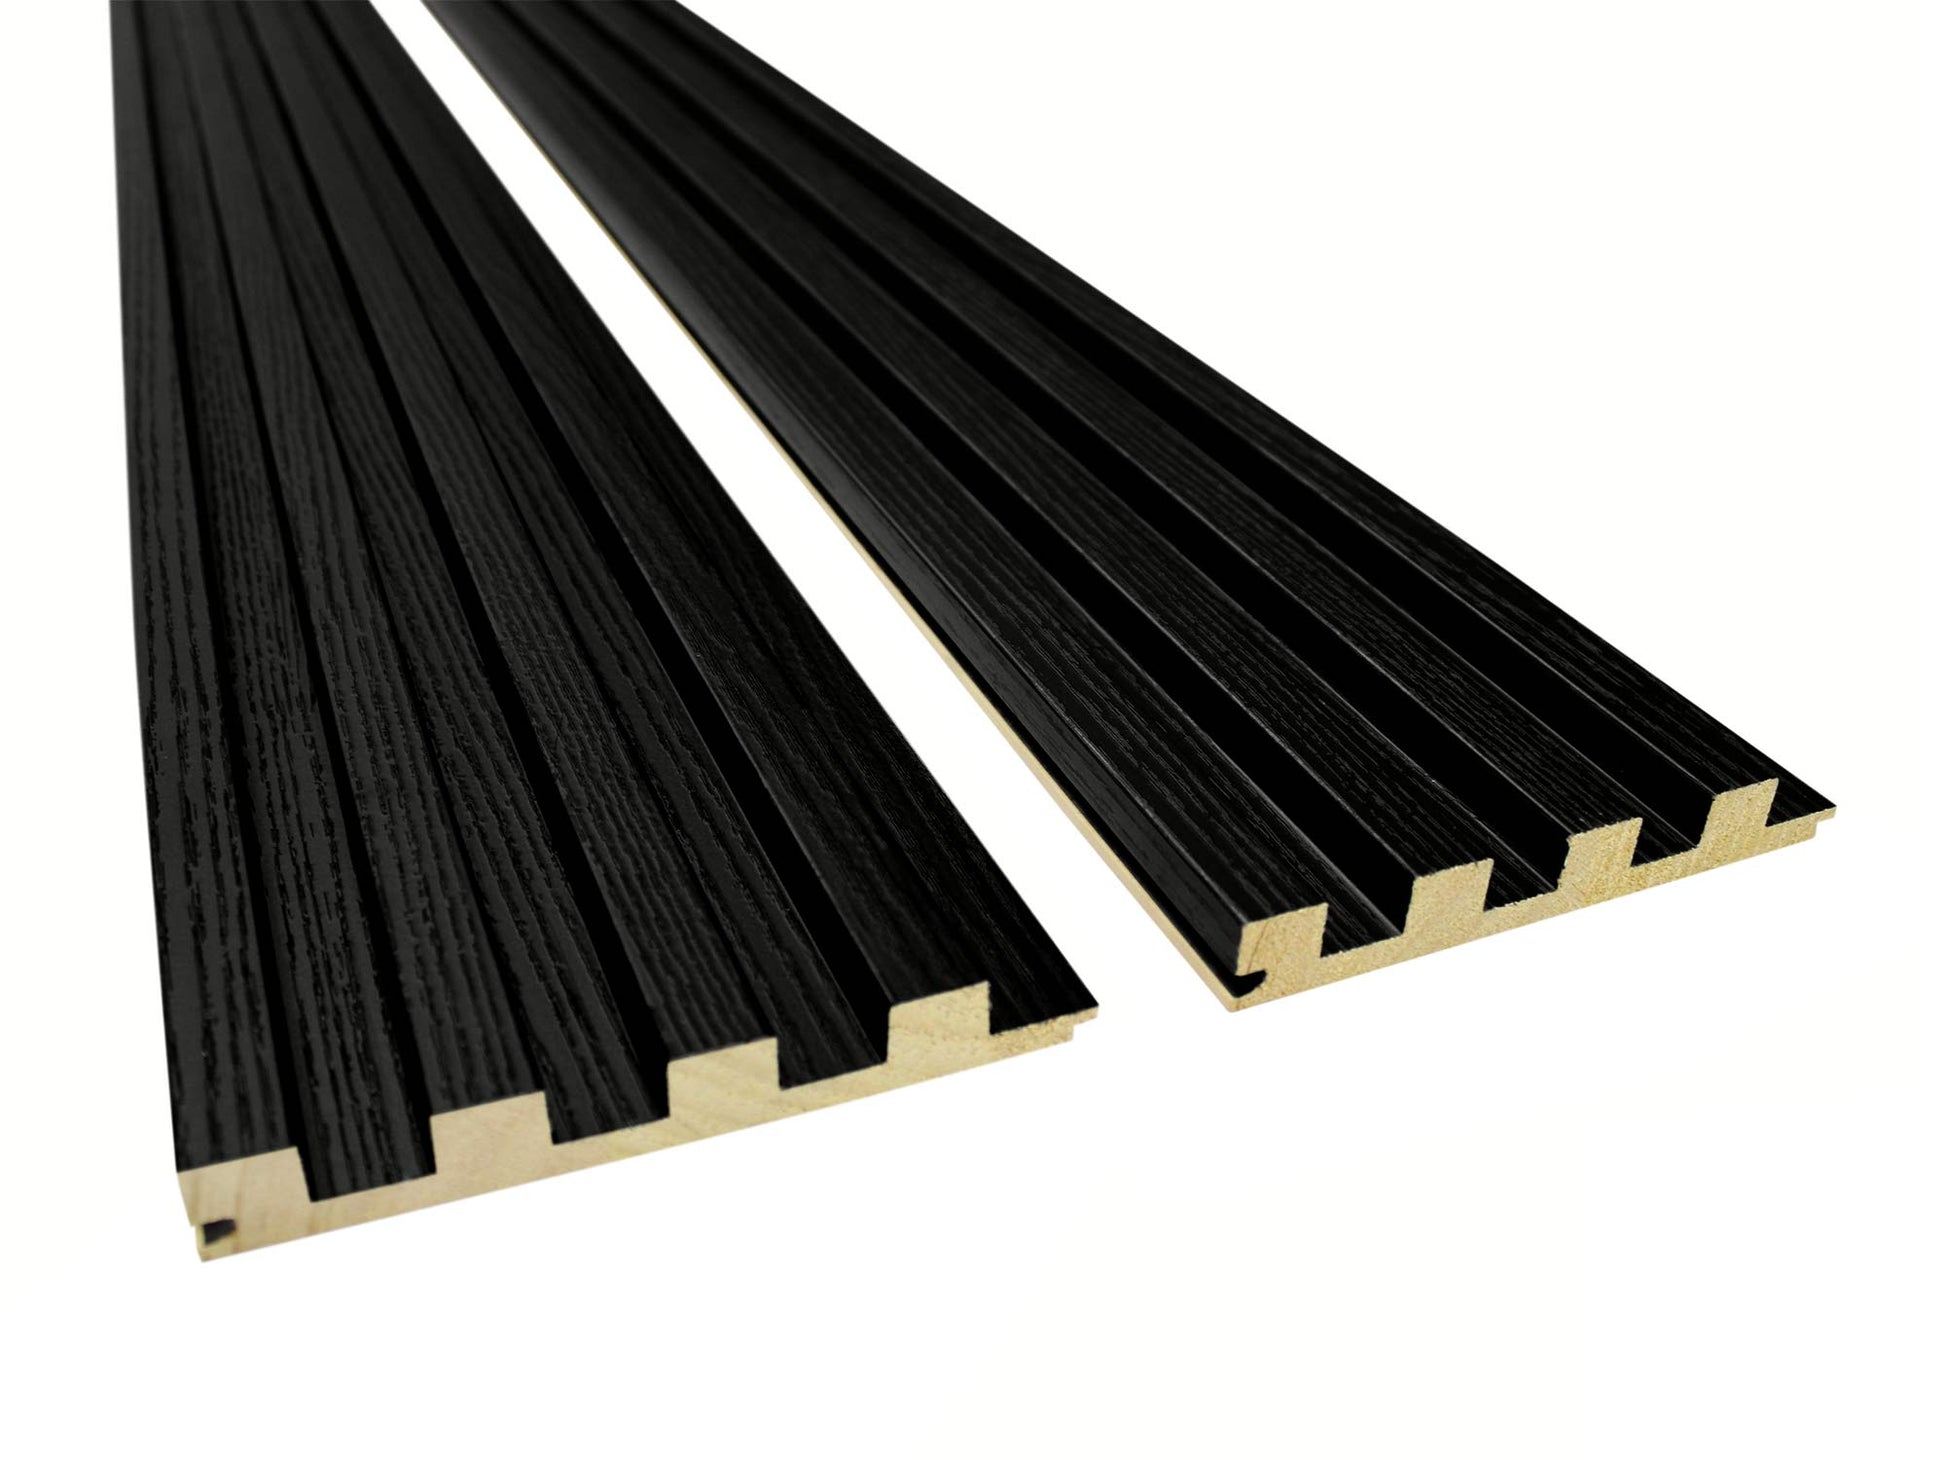 Ultra Black Slat Wood Panels for Walls - Sleek (106 x 5 3/4) –